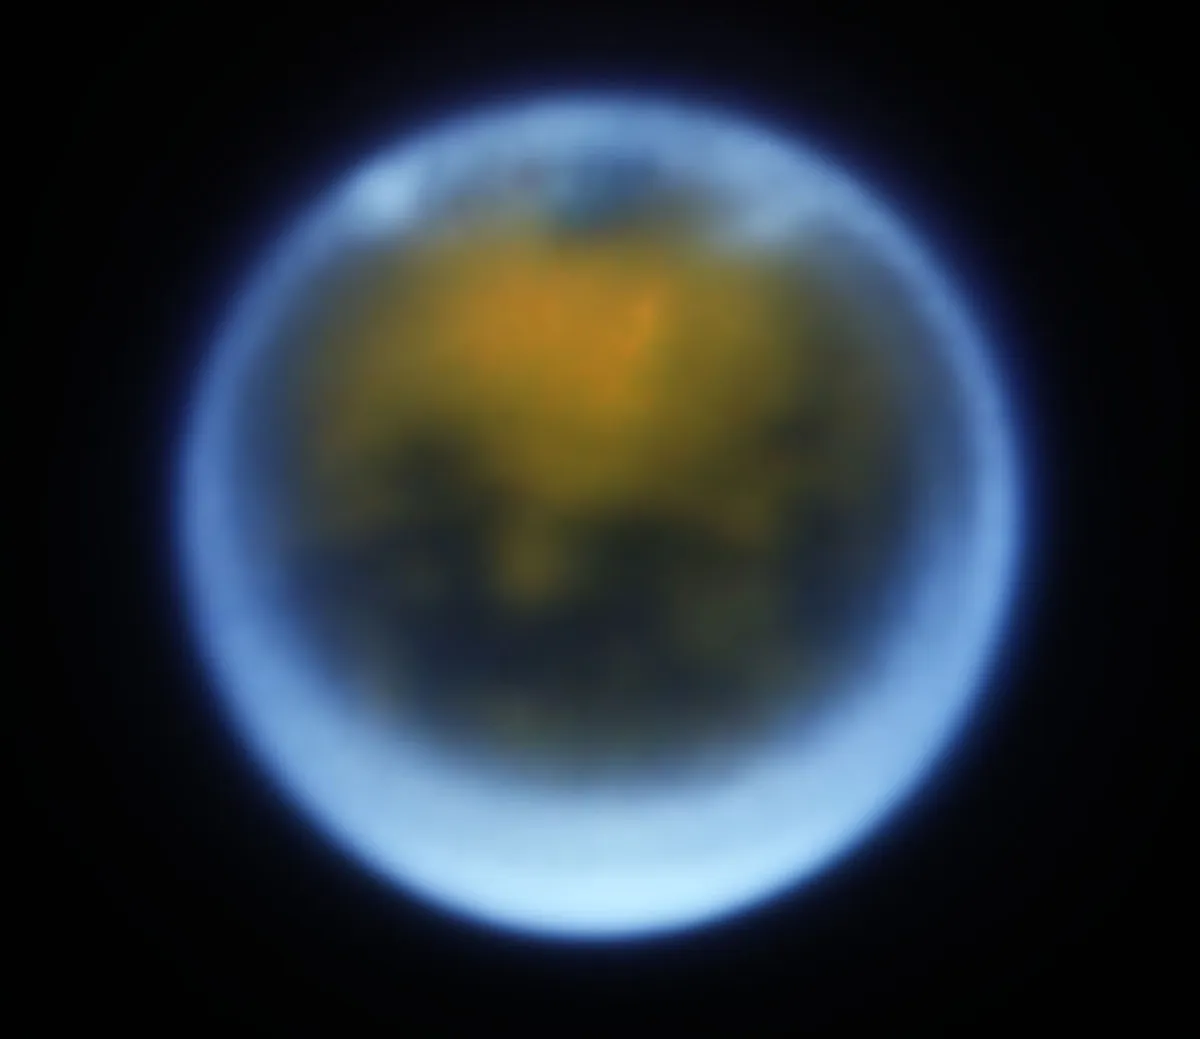 Credit: W. M. Keck Observatory/Judy Schmidt Clouds in the atmosphere of Saturn’s moon Titan Keck II Telescope, 1 December 2022